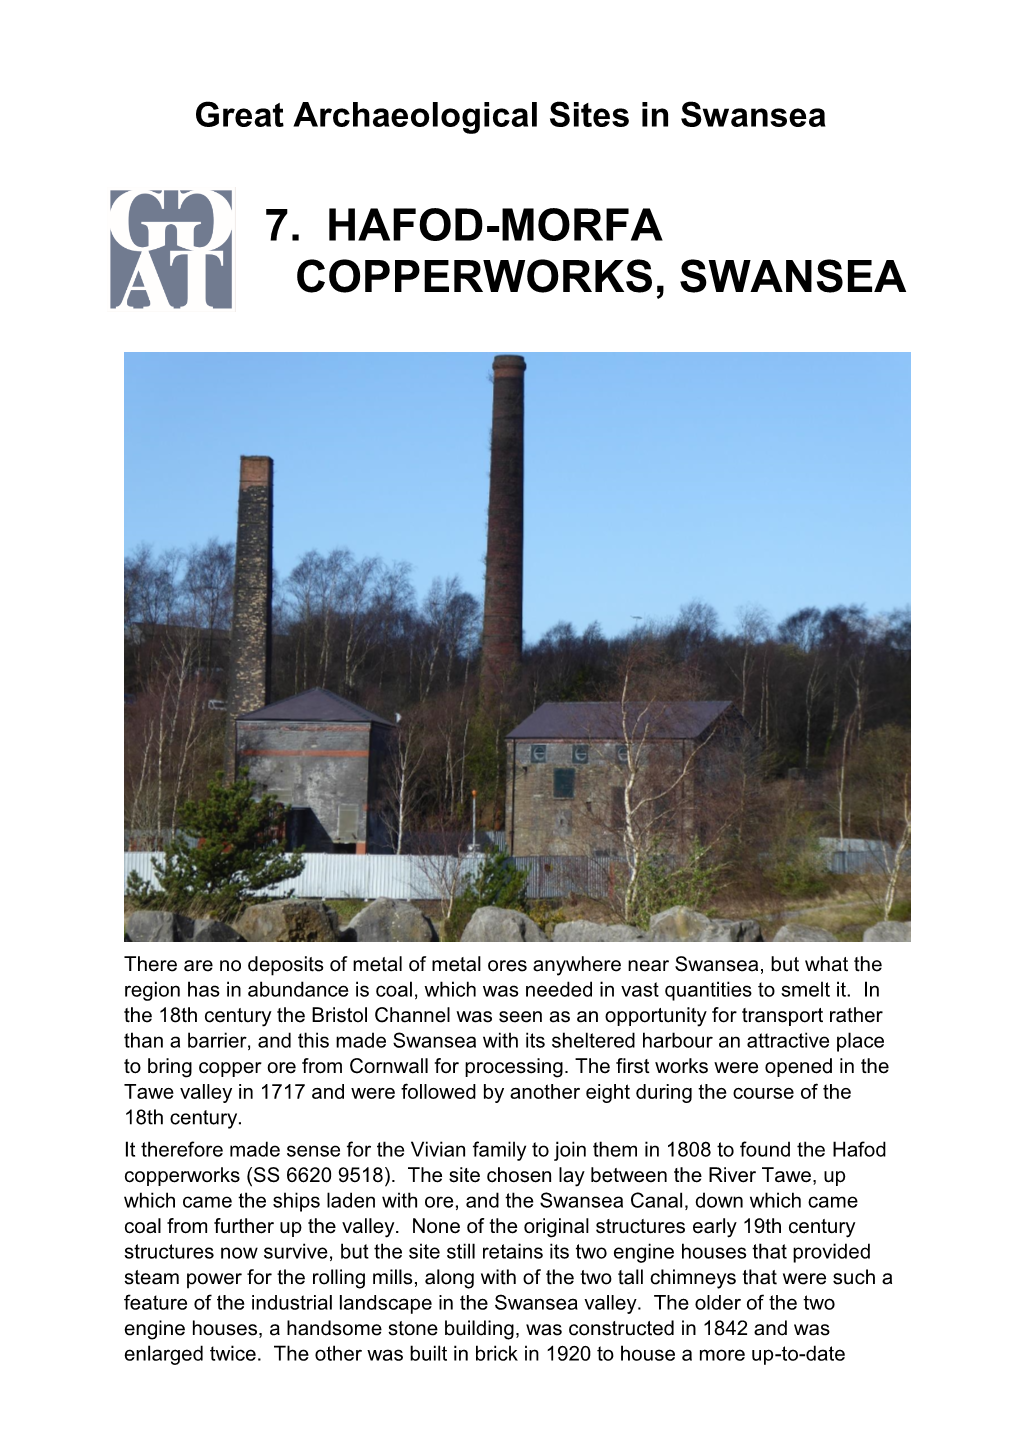 7. Hafod-Morfa Copperworks, Swansea